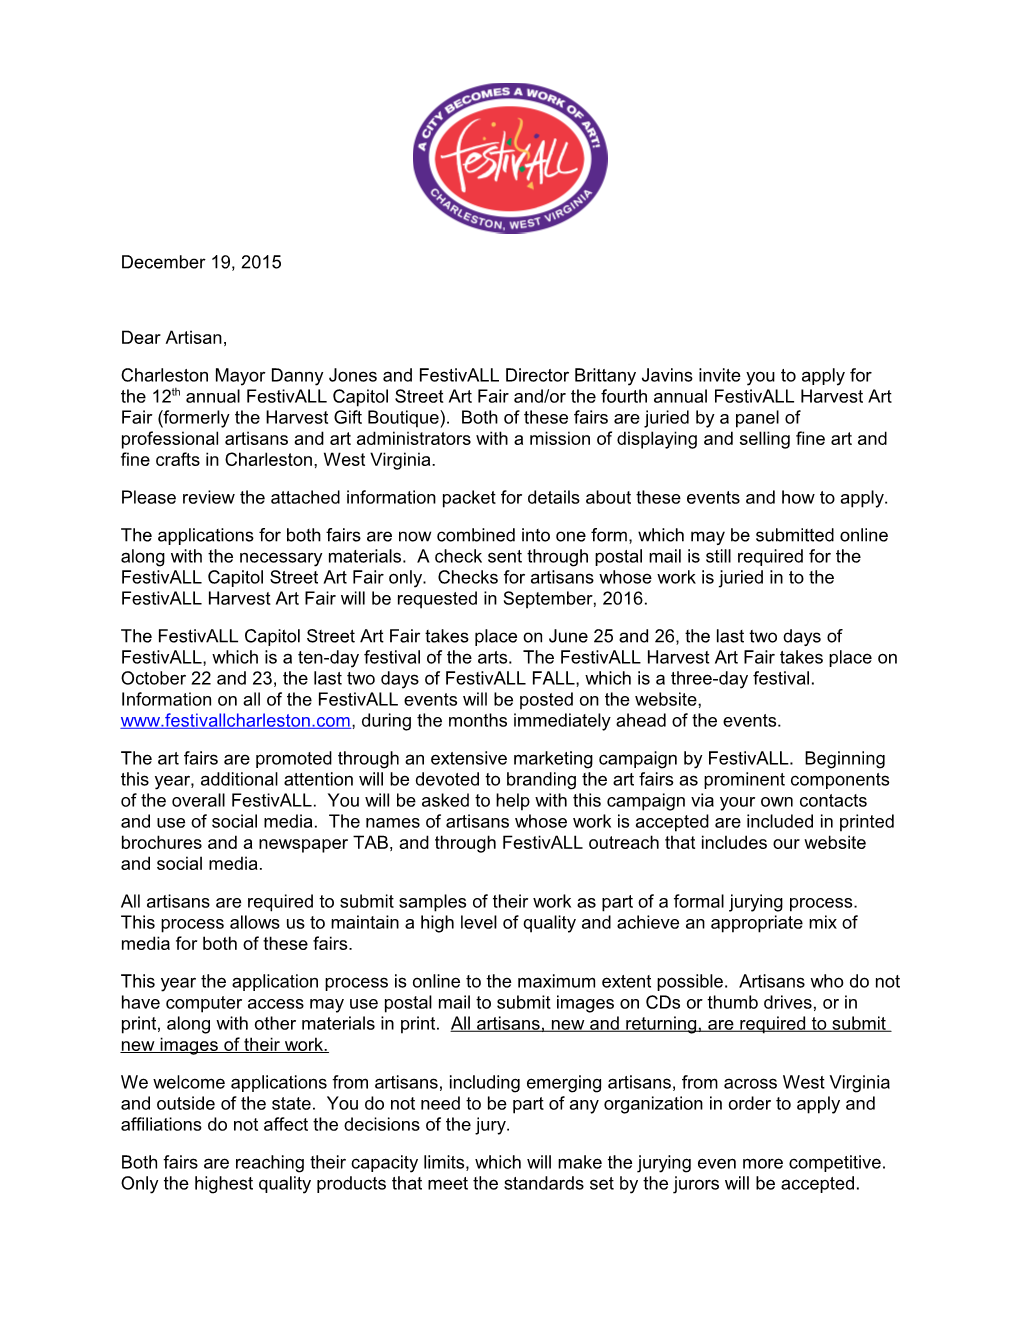 Charleston Mayor Danny Jones and Festivall Director Brittany Javins Invite You to Apply